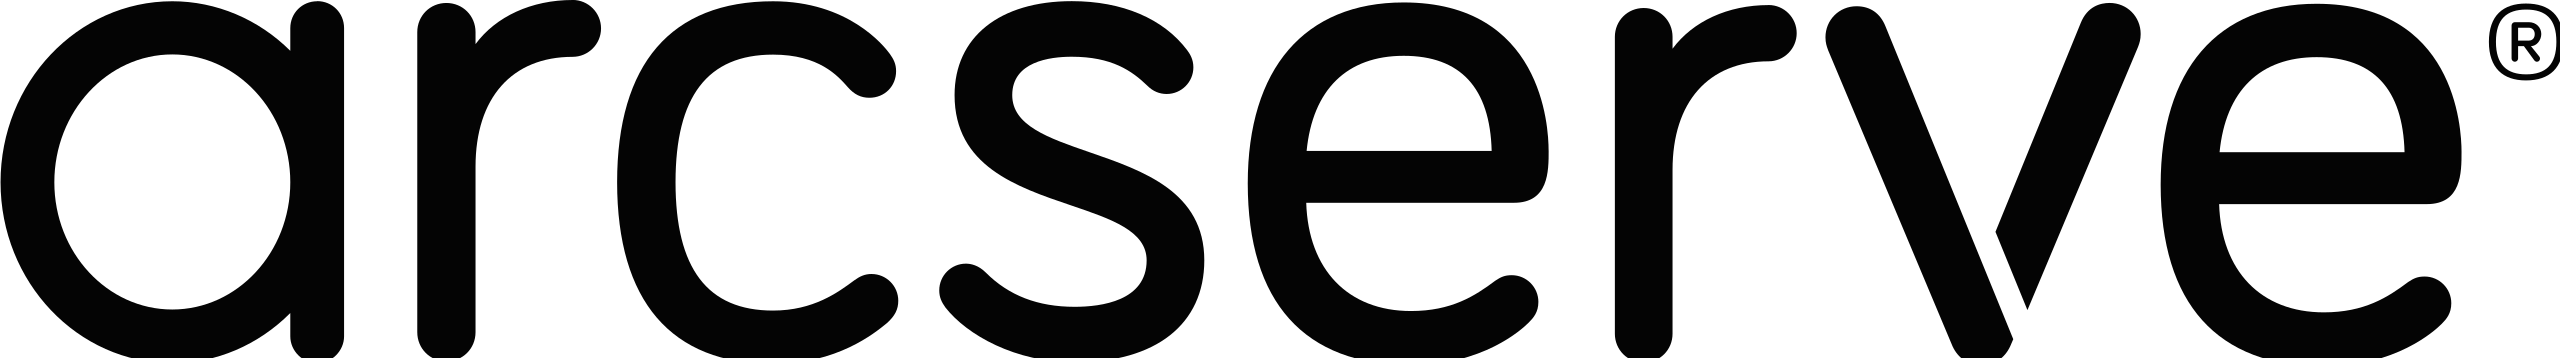 Arcserve Logo.svg